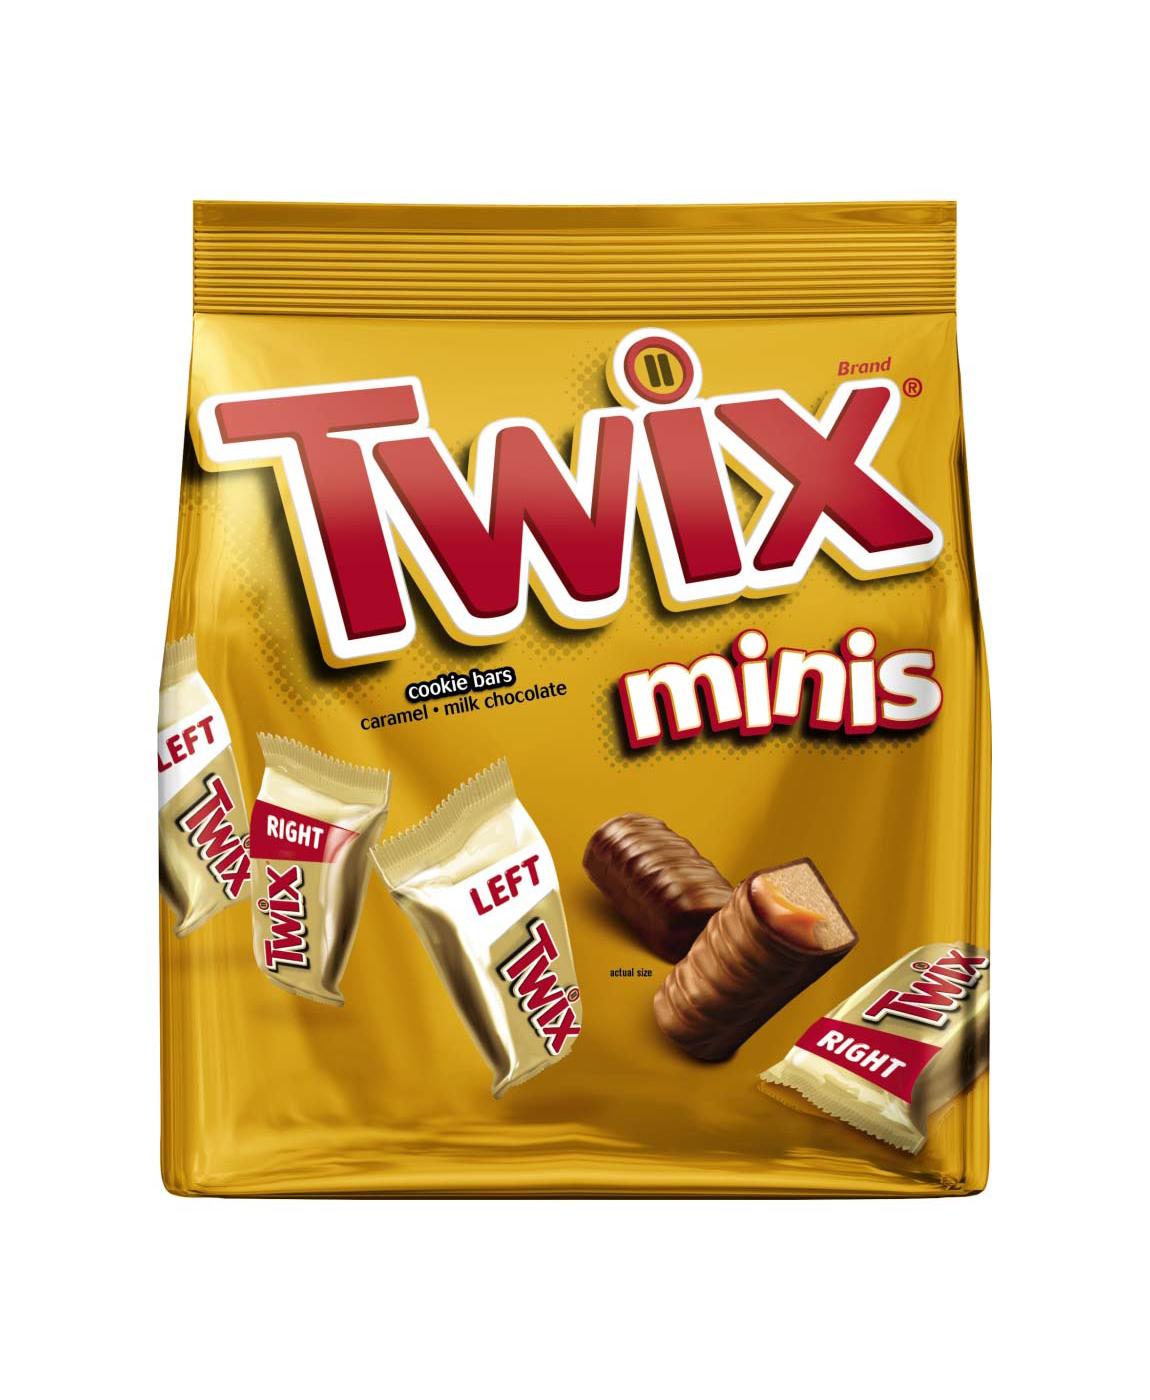 Twix Minis Caramel Cookie Bars Sharing Size Bag; image 1 of 7